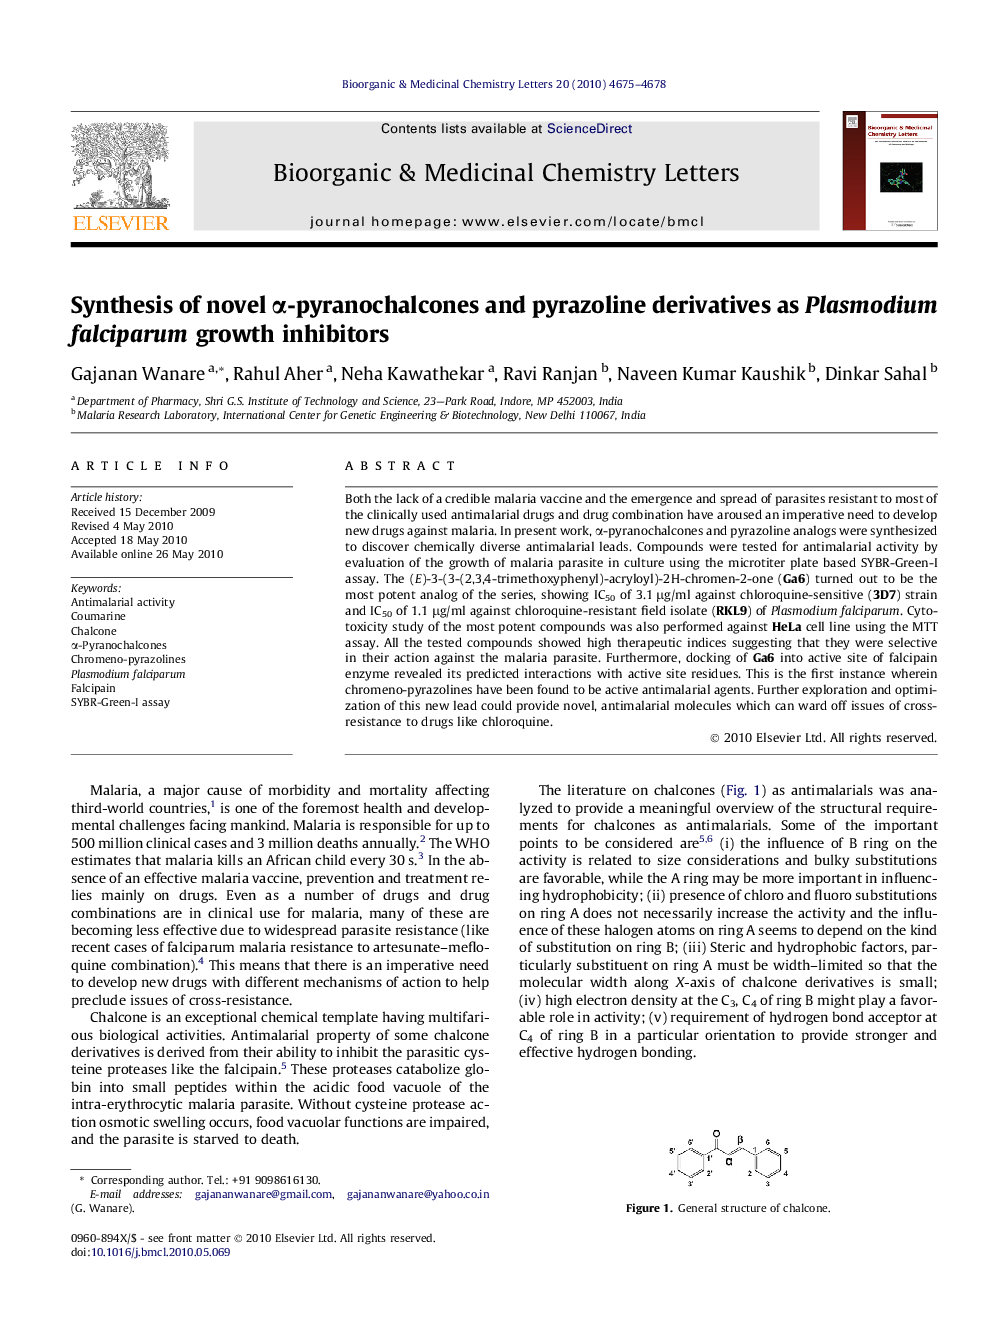 Synthesis of novel Î±-pyranochalcones and pyrazoline derivatives as Plasmodium falciparum growth inhibitors